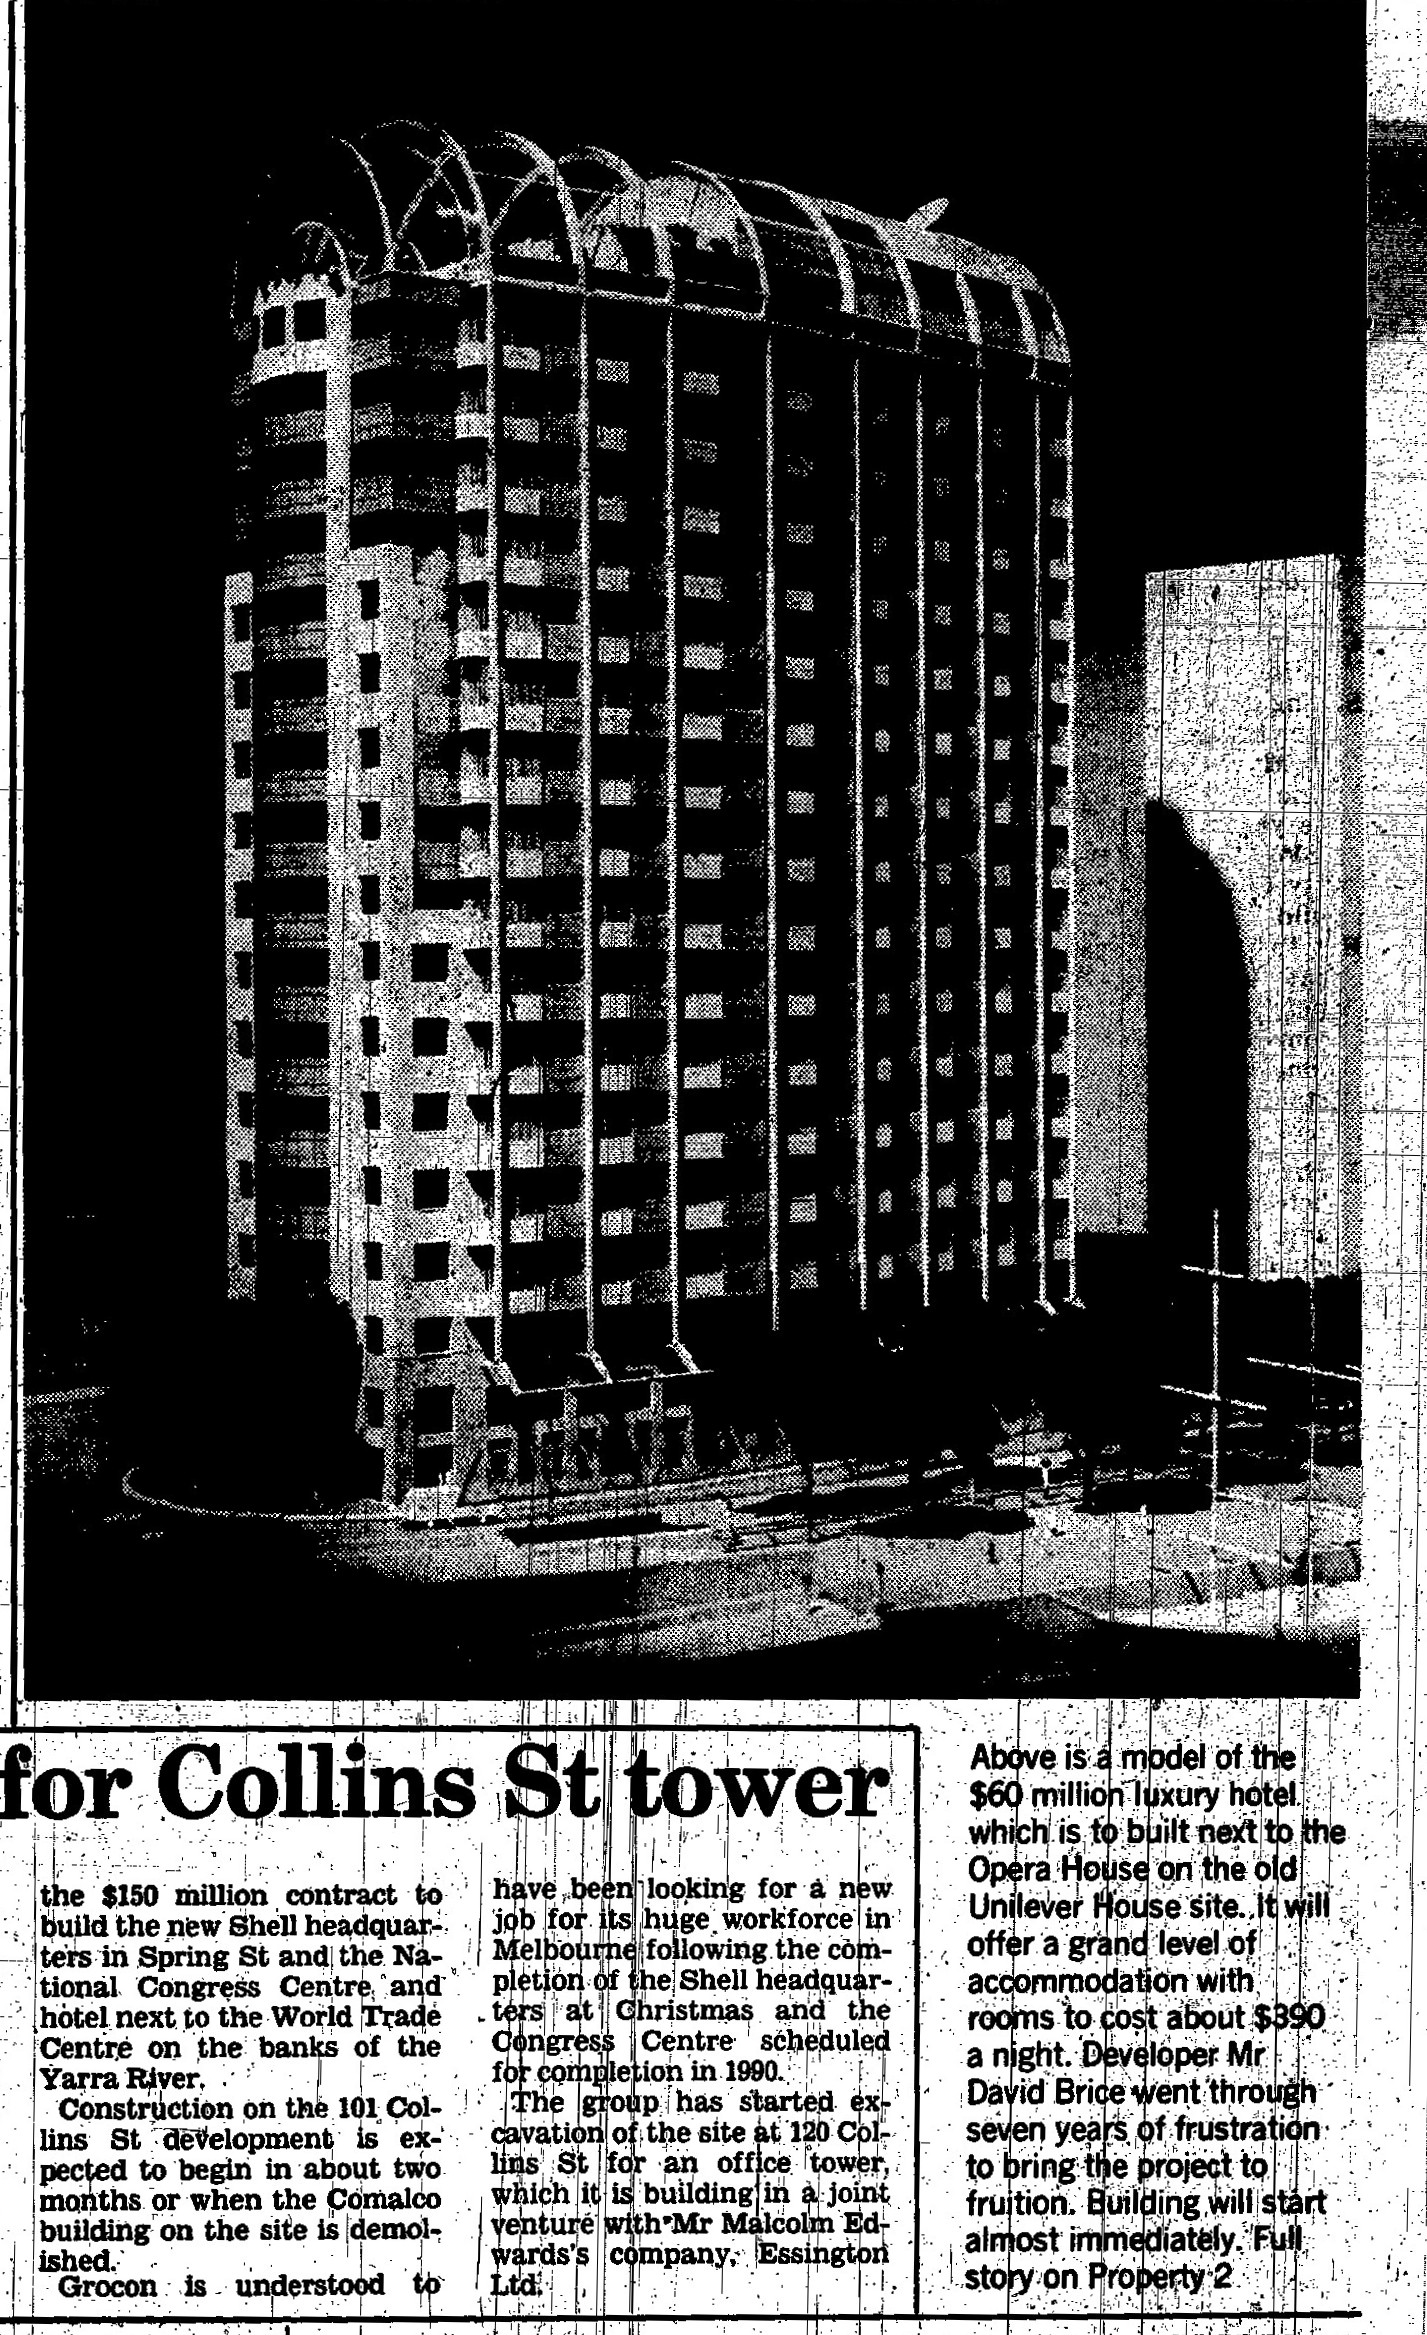 Unilever house redevelopment april 2 1988 (3)